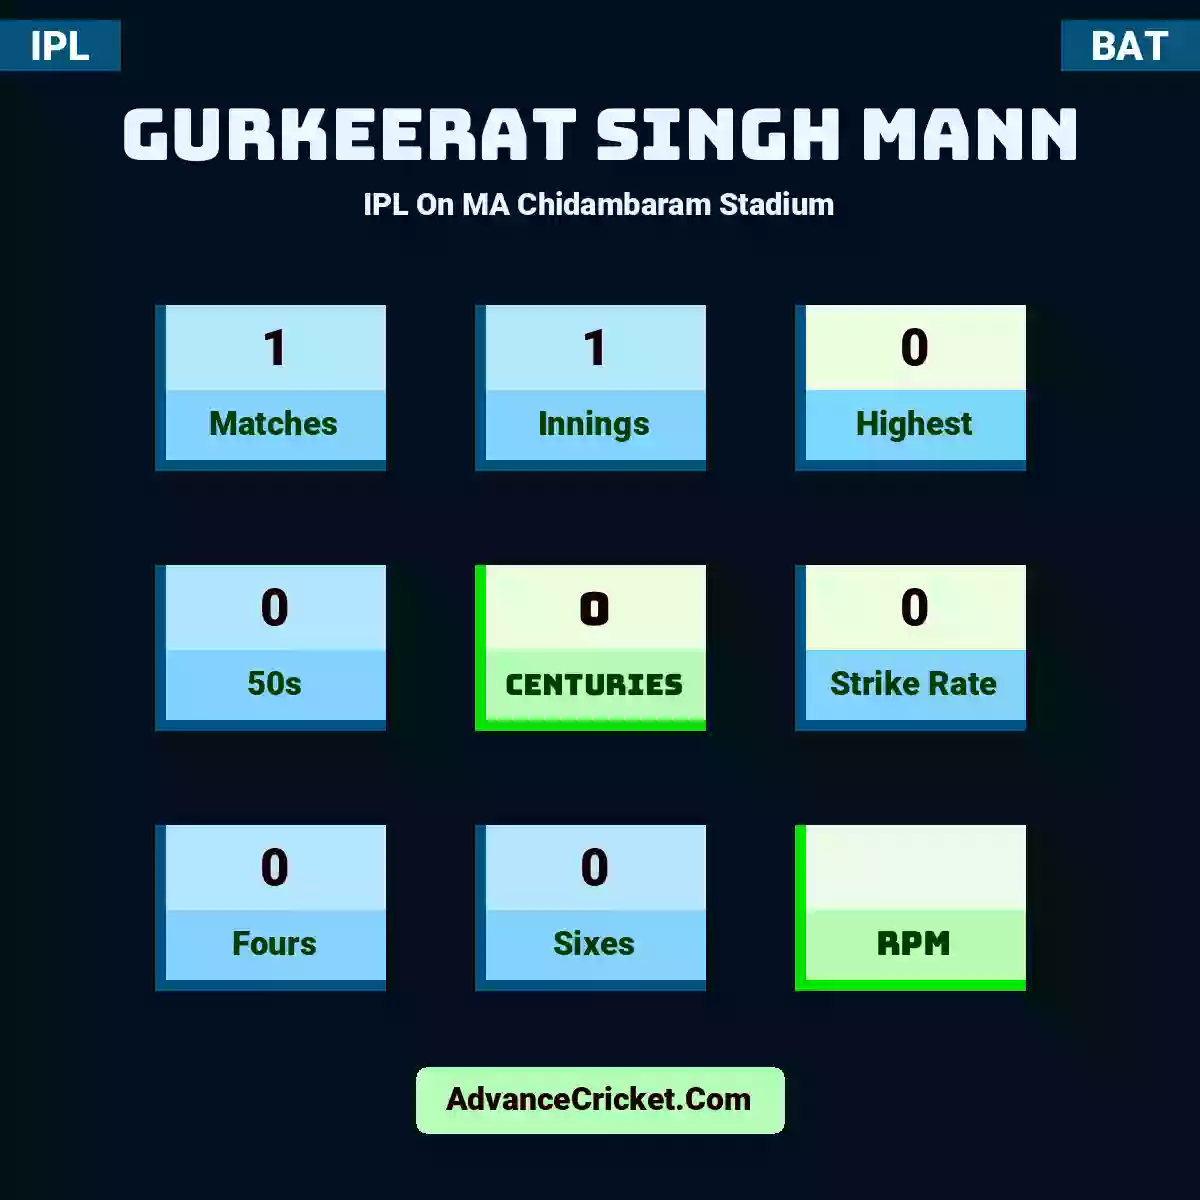 Gurkeerat Singh Mann IPL  On MA Chidambaram Stadium, Gurkeerat Singh Mann played 1 matches, scored 0 runs as highest, 0 half-centuries, and 0 centuries, with a strike rate of 0. G.Mann hit 0 fours and 0 sixes.